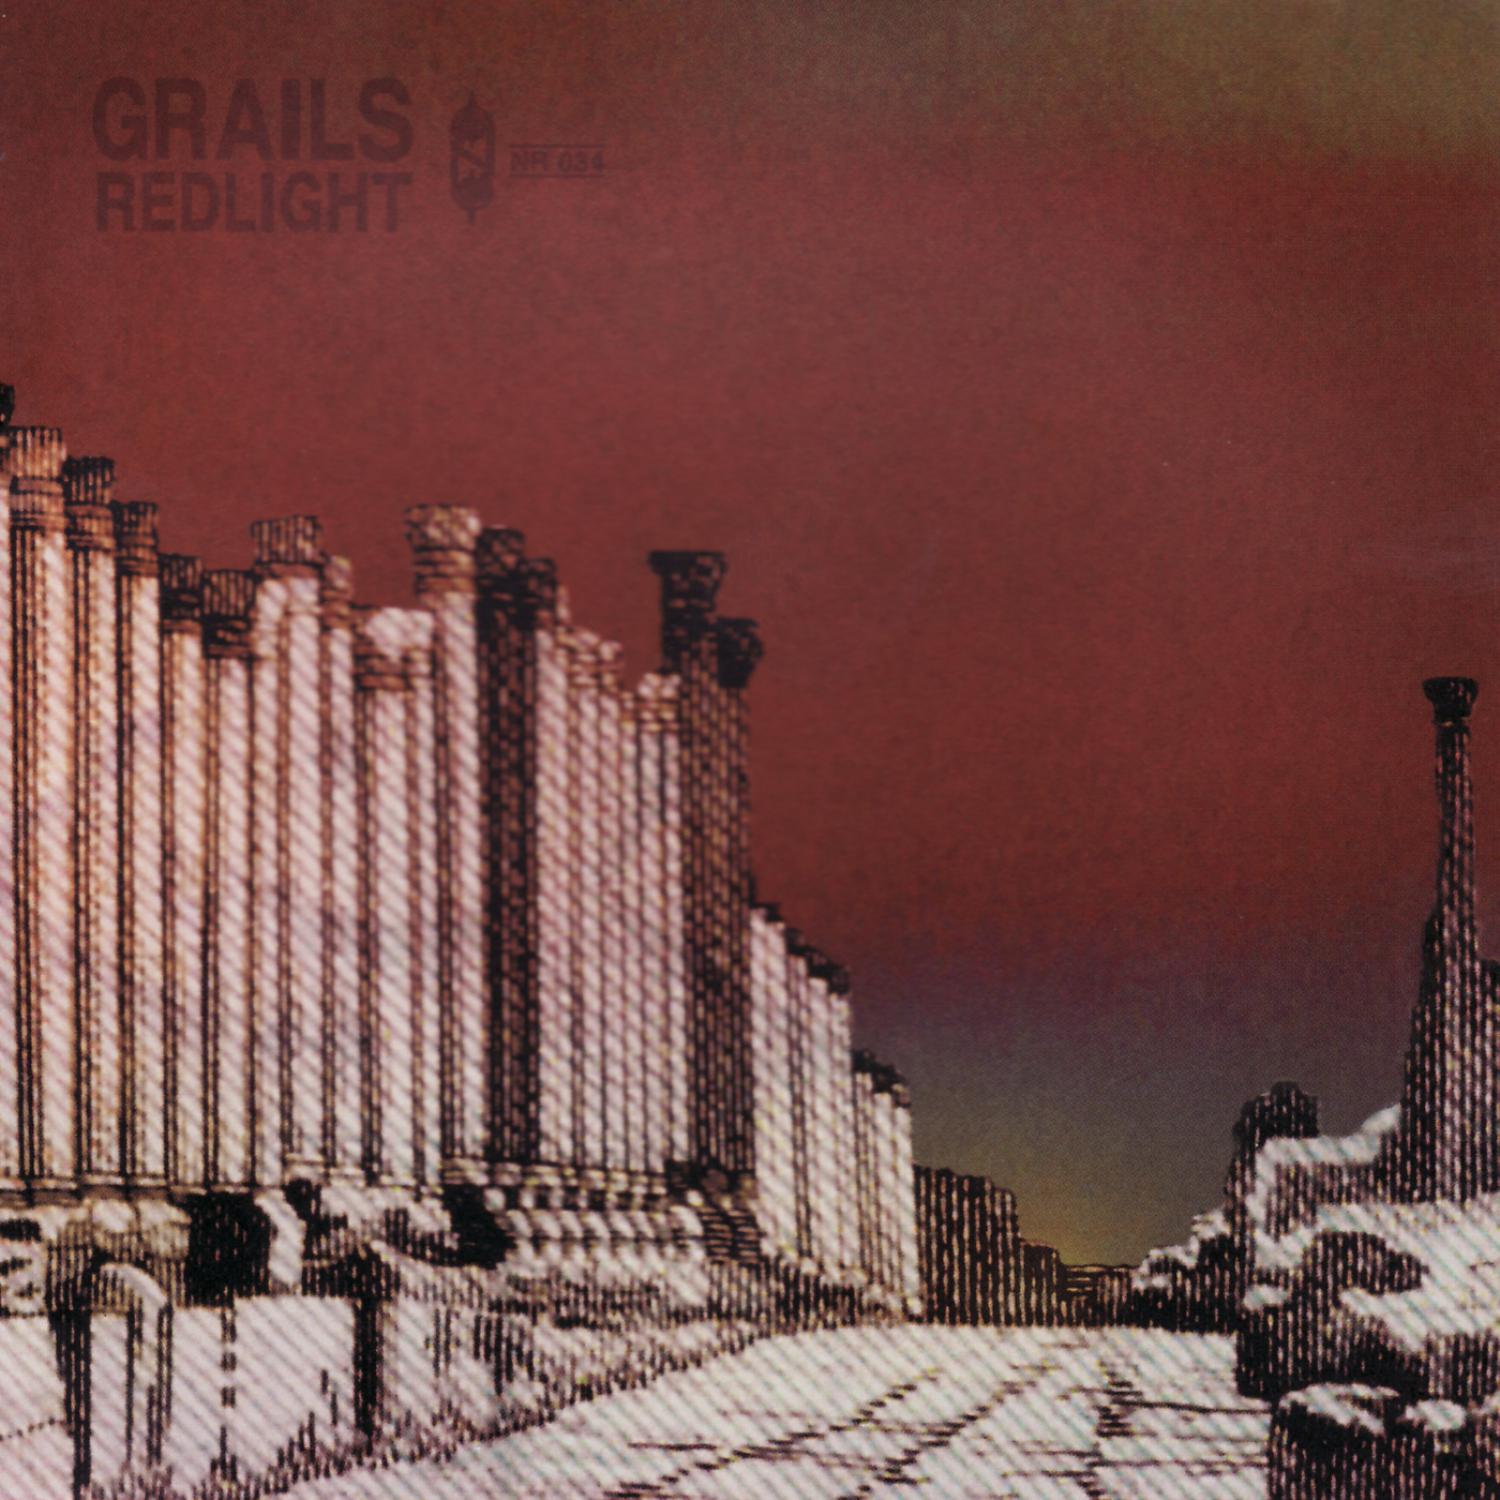 Grails - High & Low